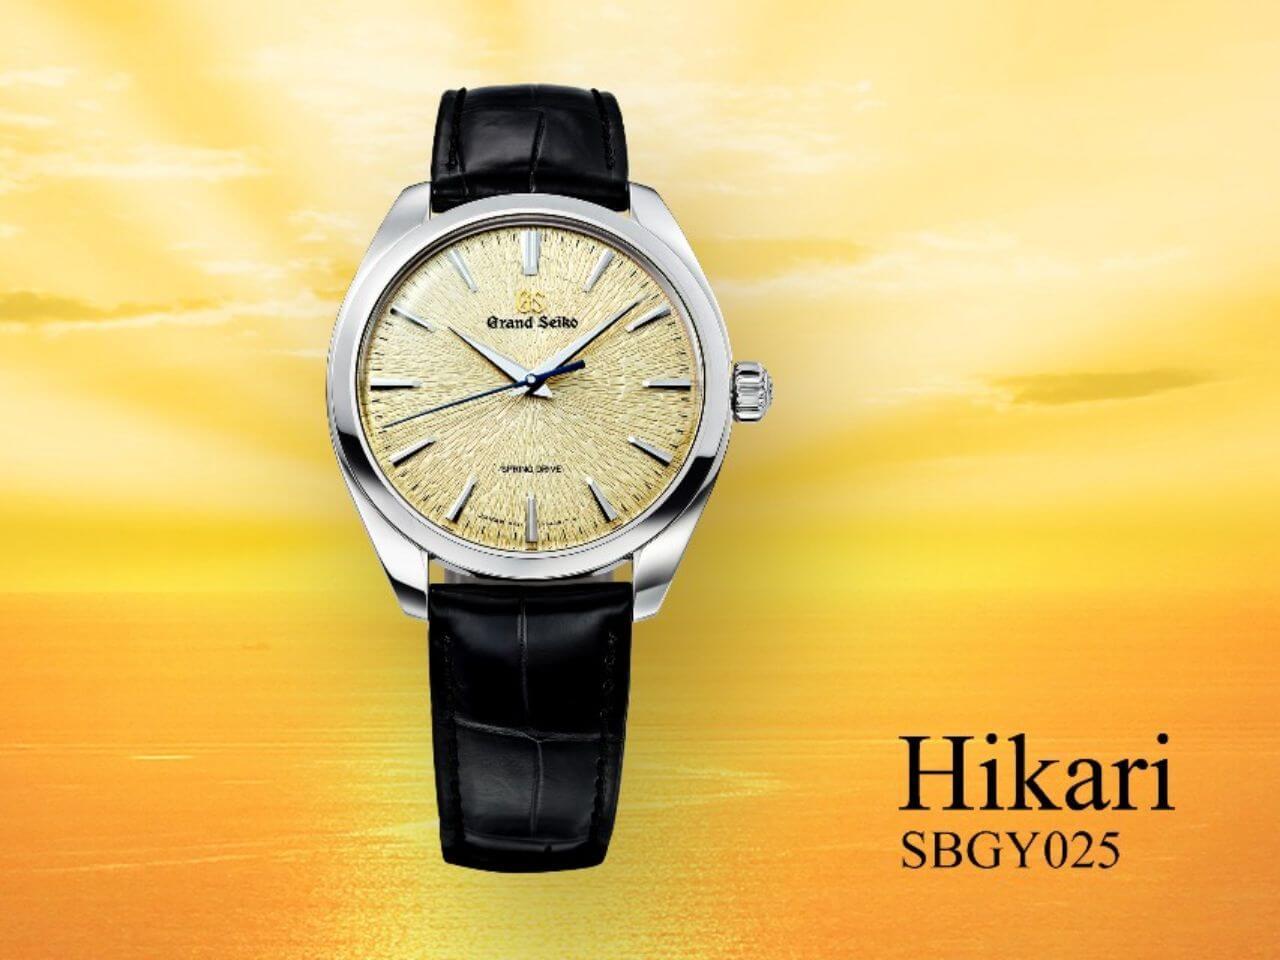 Hikari SBGY025